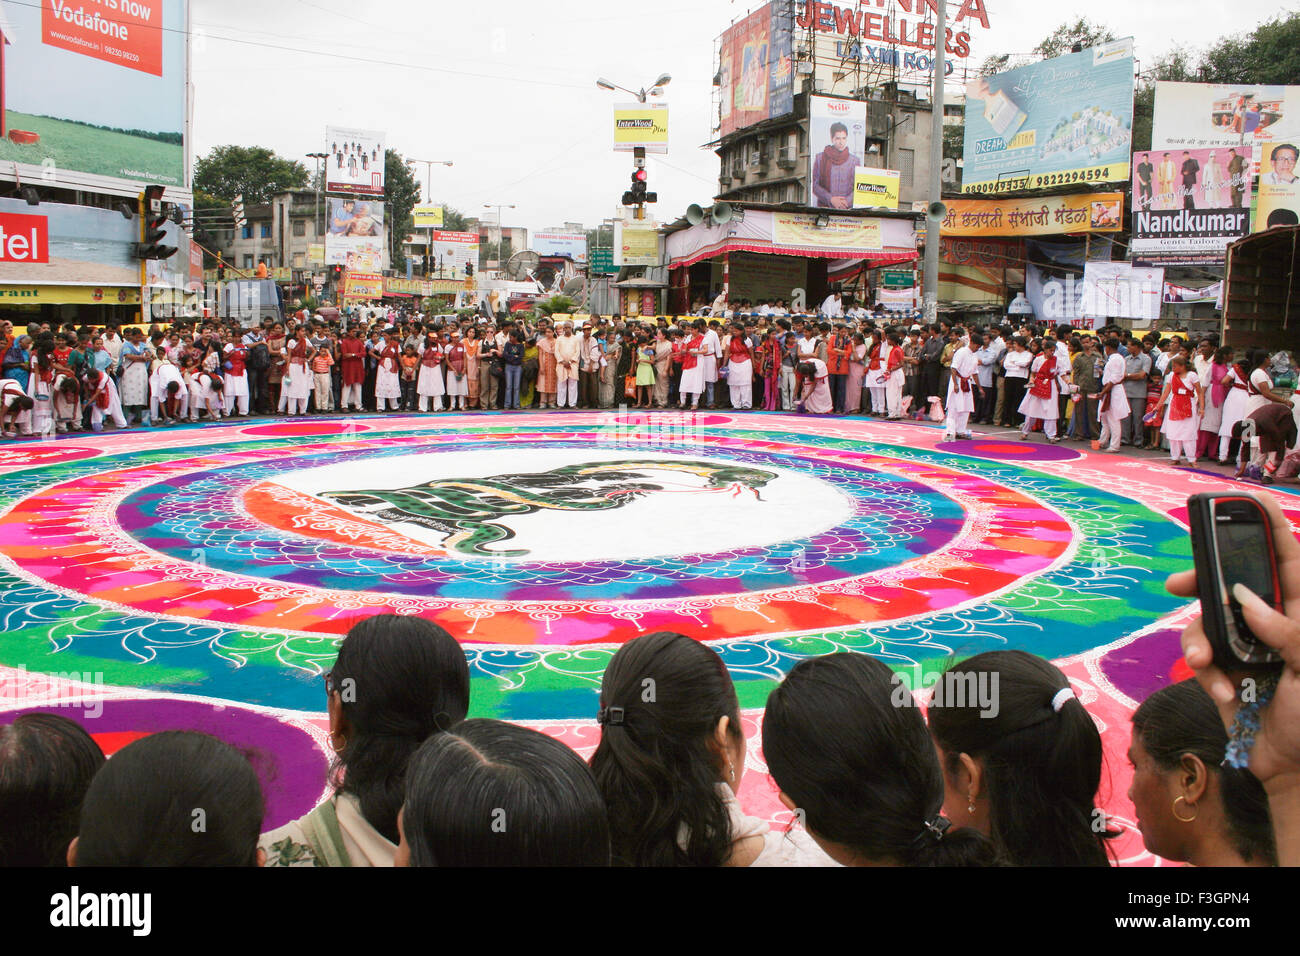 Huge circular artwork called rangoli traditional cultural and heritage art of India ; Pune ; Maharashtra ; India Stock Photo